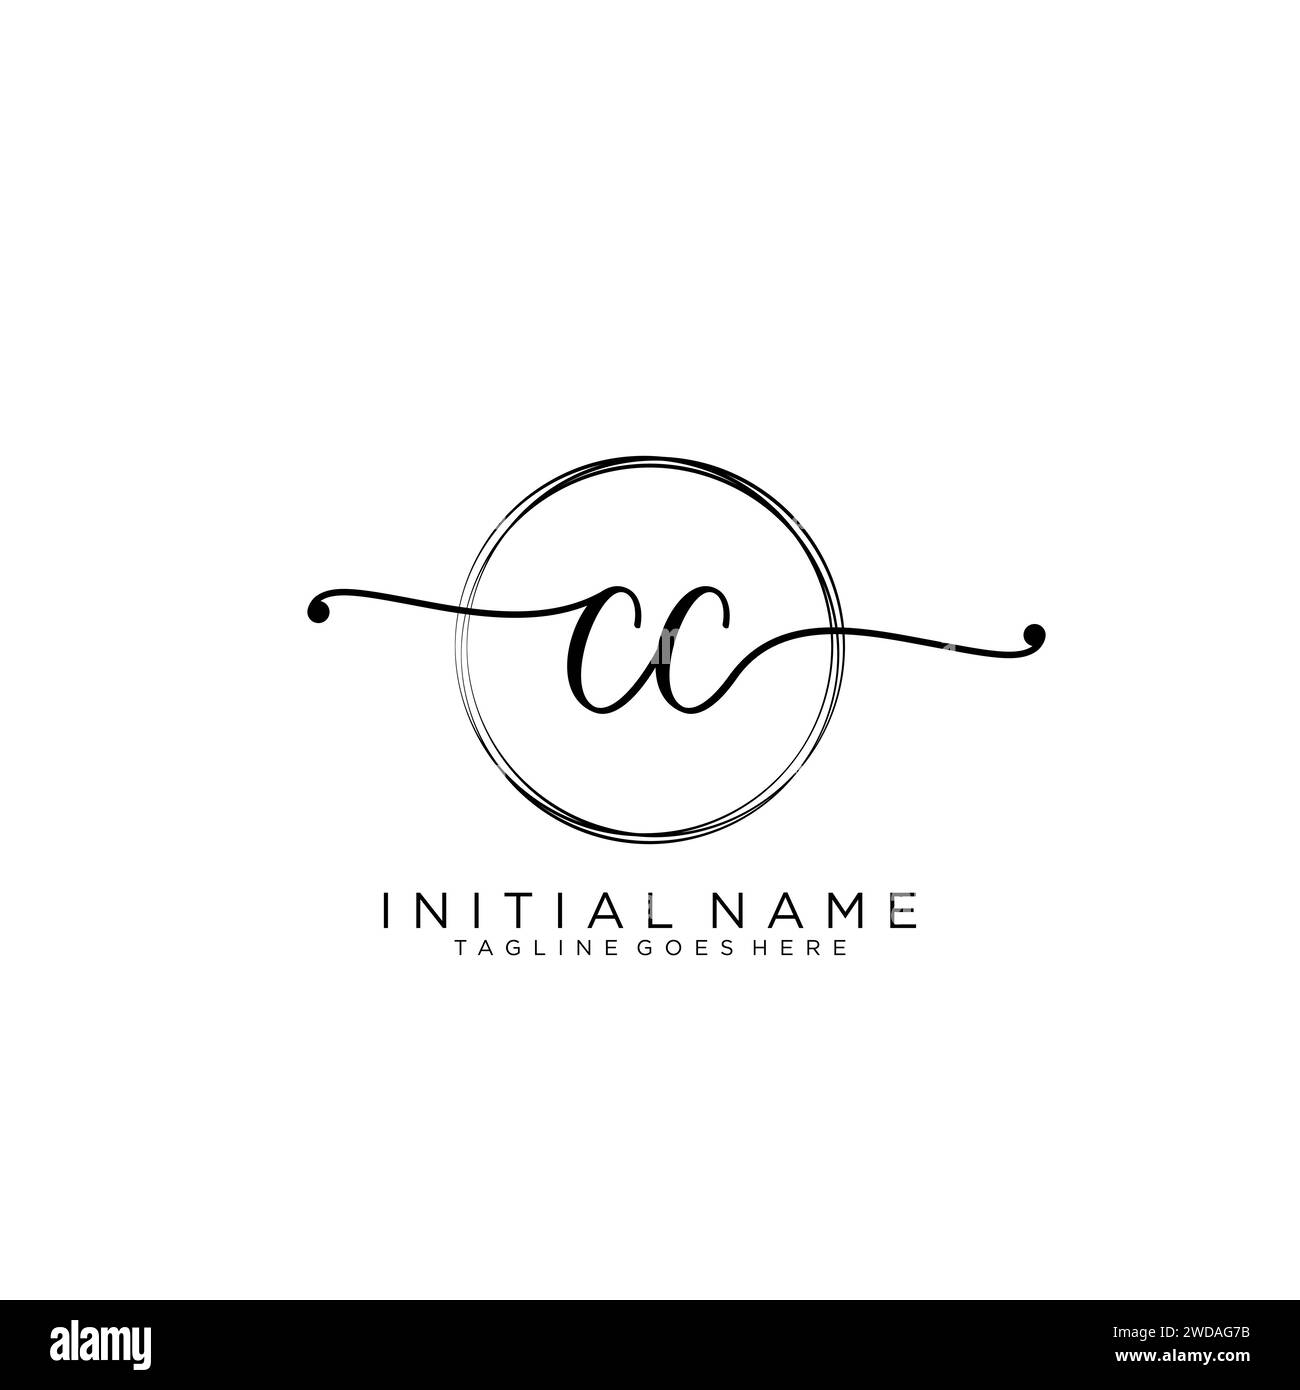 CC Initial handwriting logo with circle Stock Vector